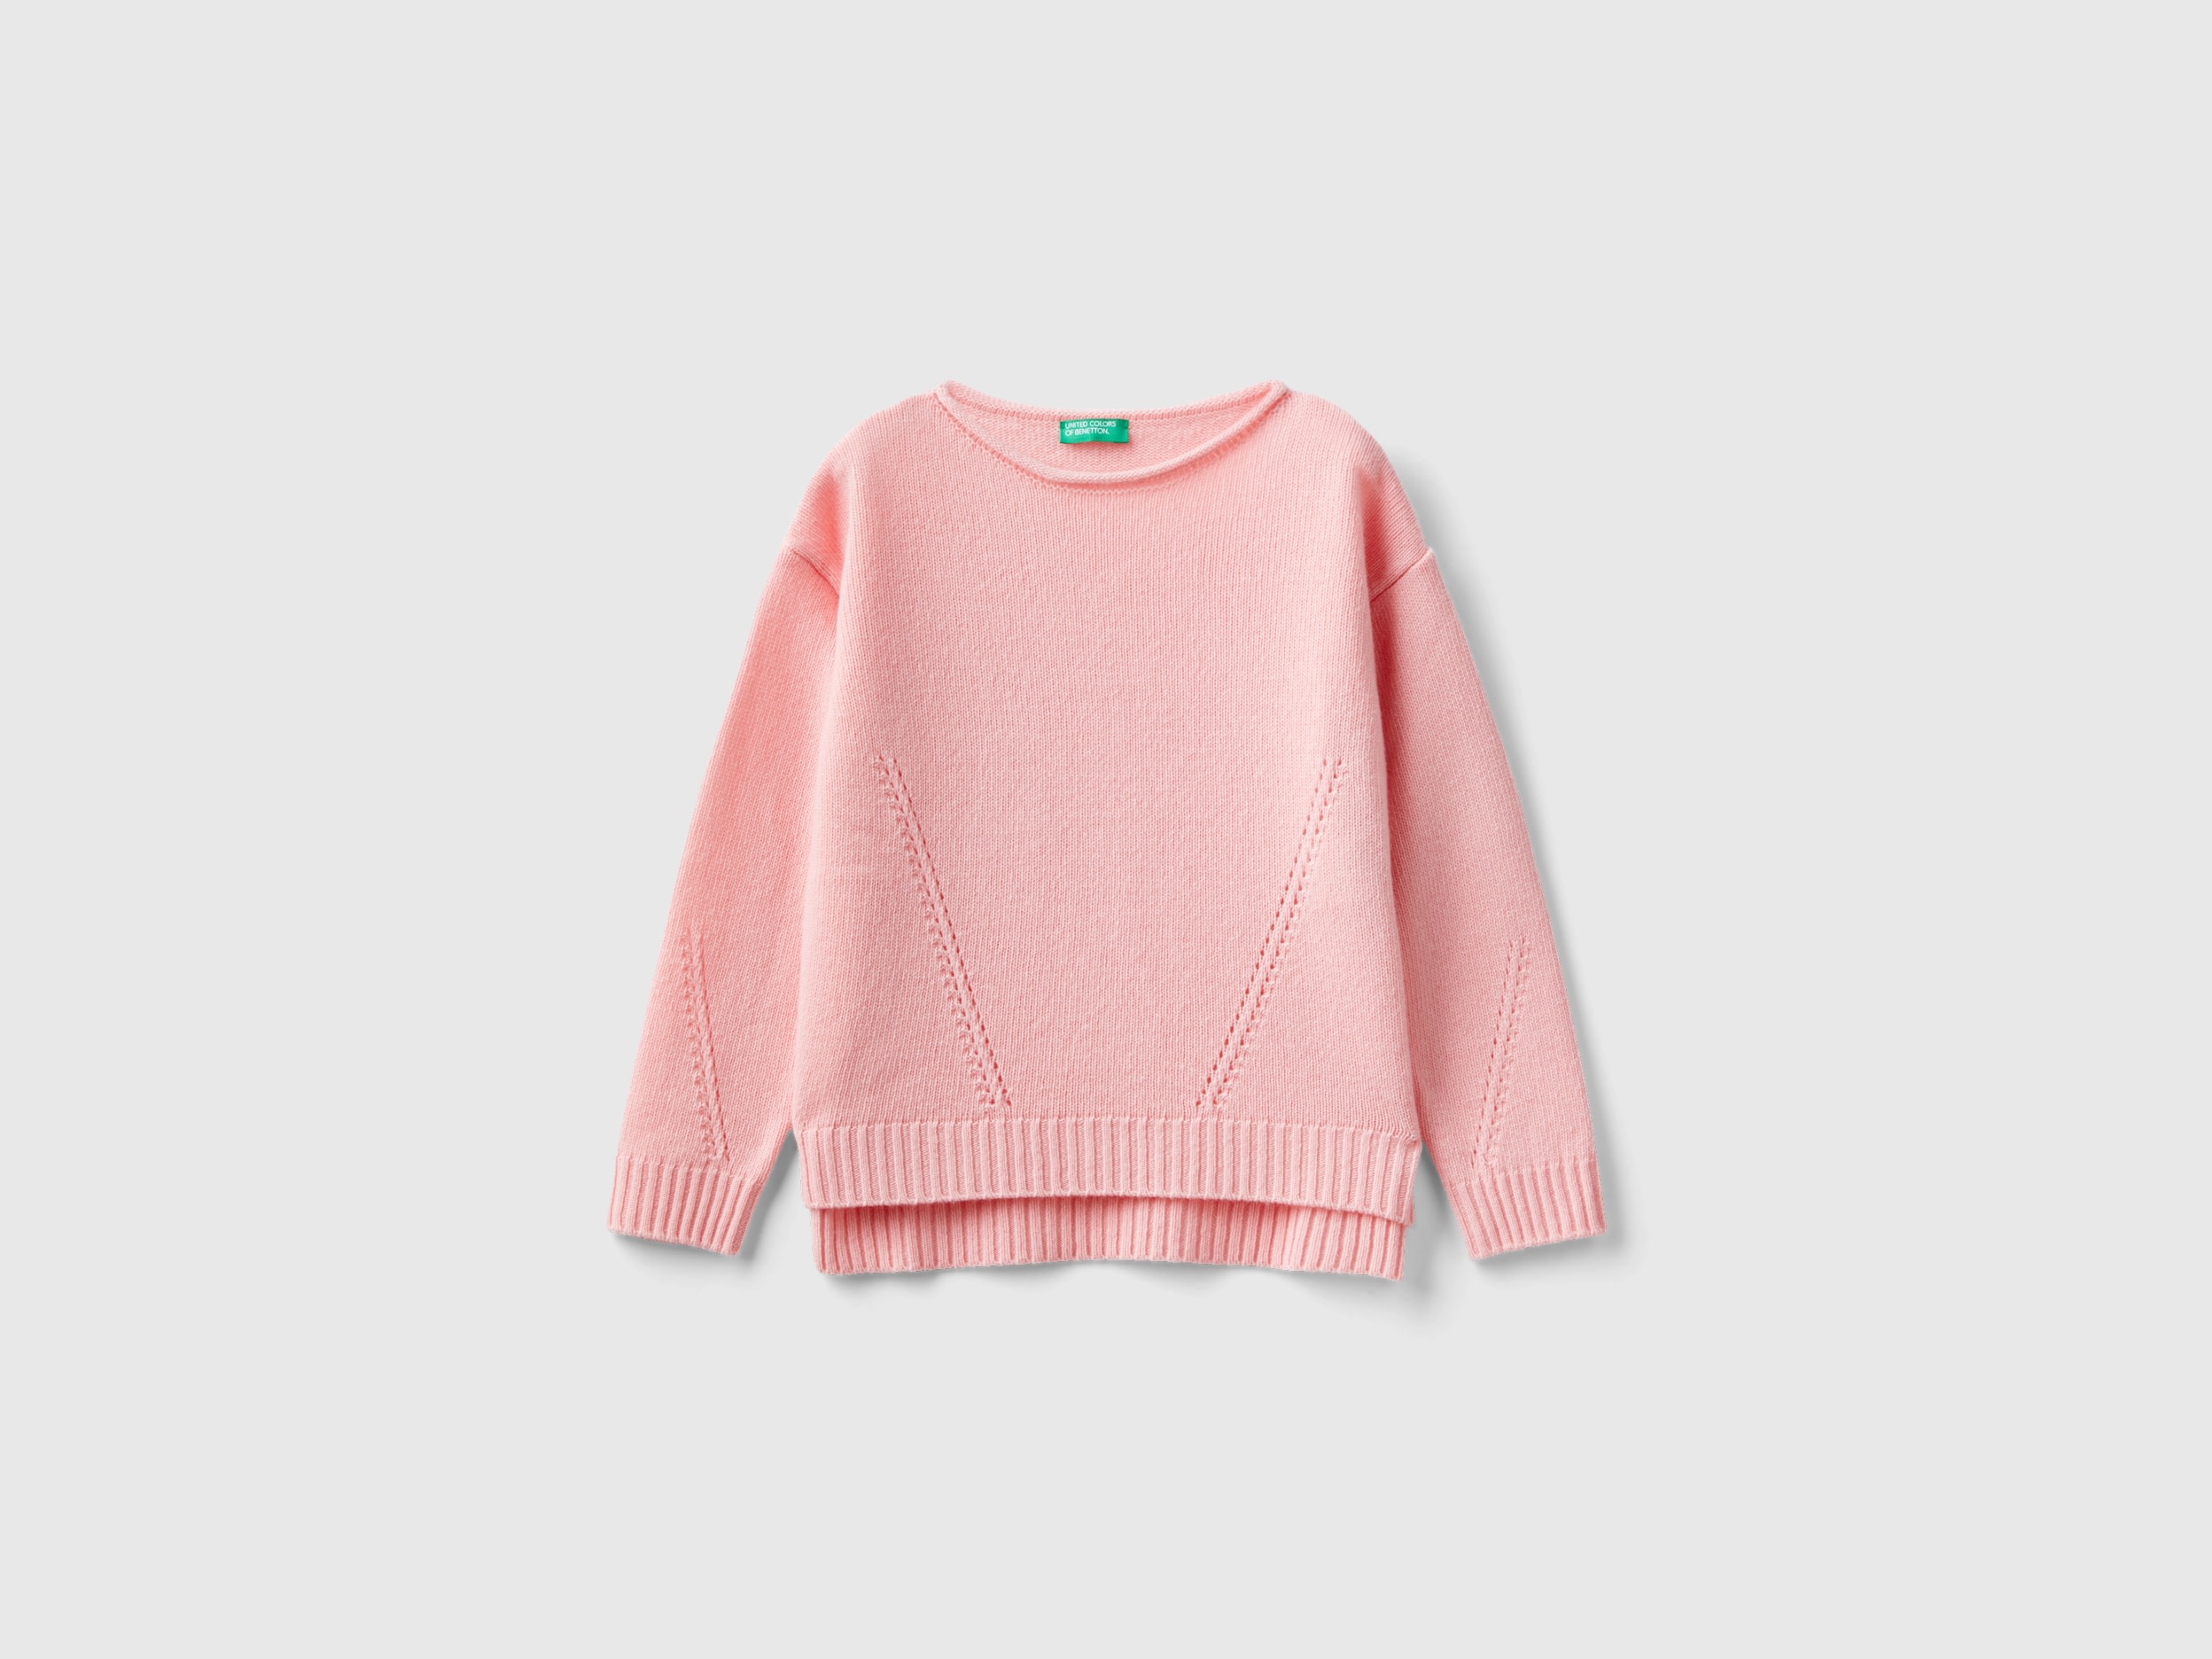 Benetton, Knit Sweater With Playful Stitching, size 2XL, Pink, Kids